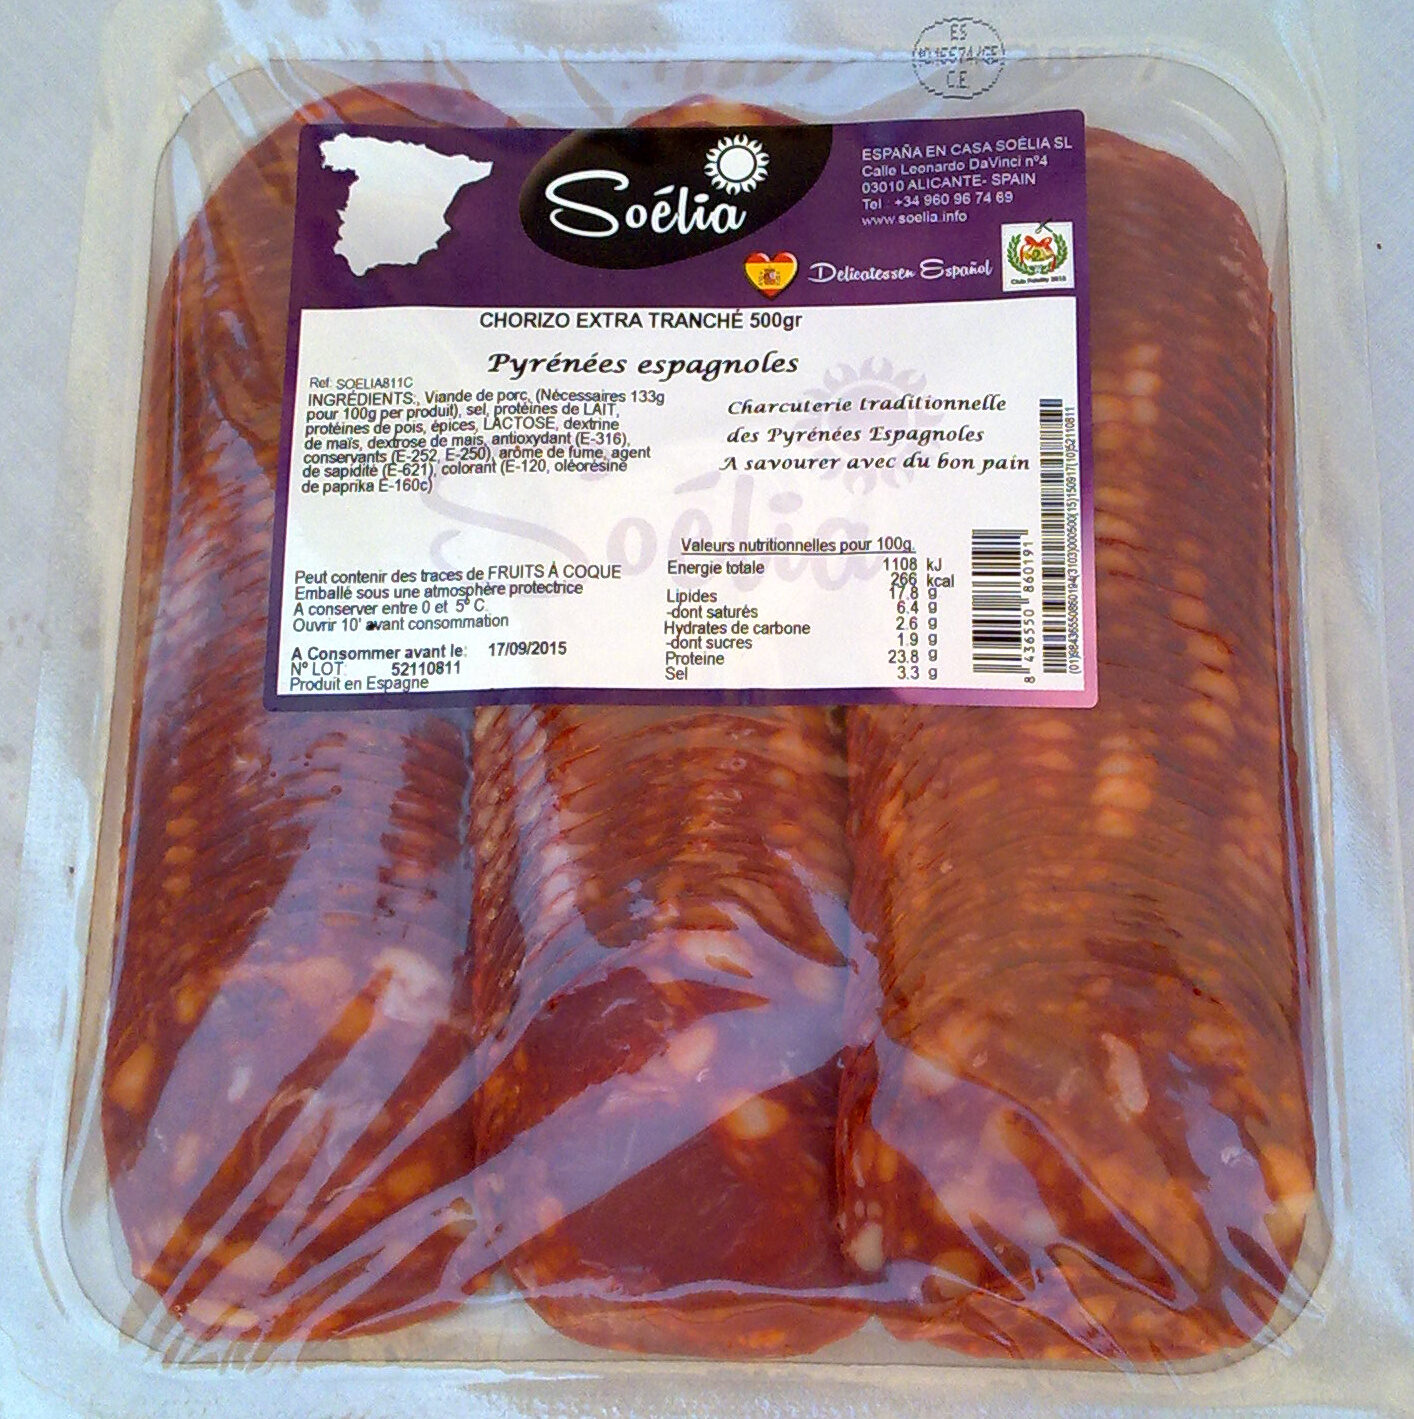 Chorizo extra tranché 500gr - Pyrénées espagnoles - Soélia - Product - fr